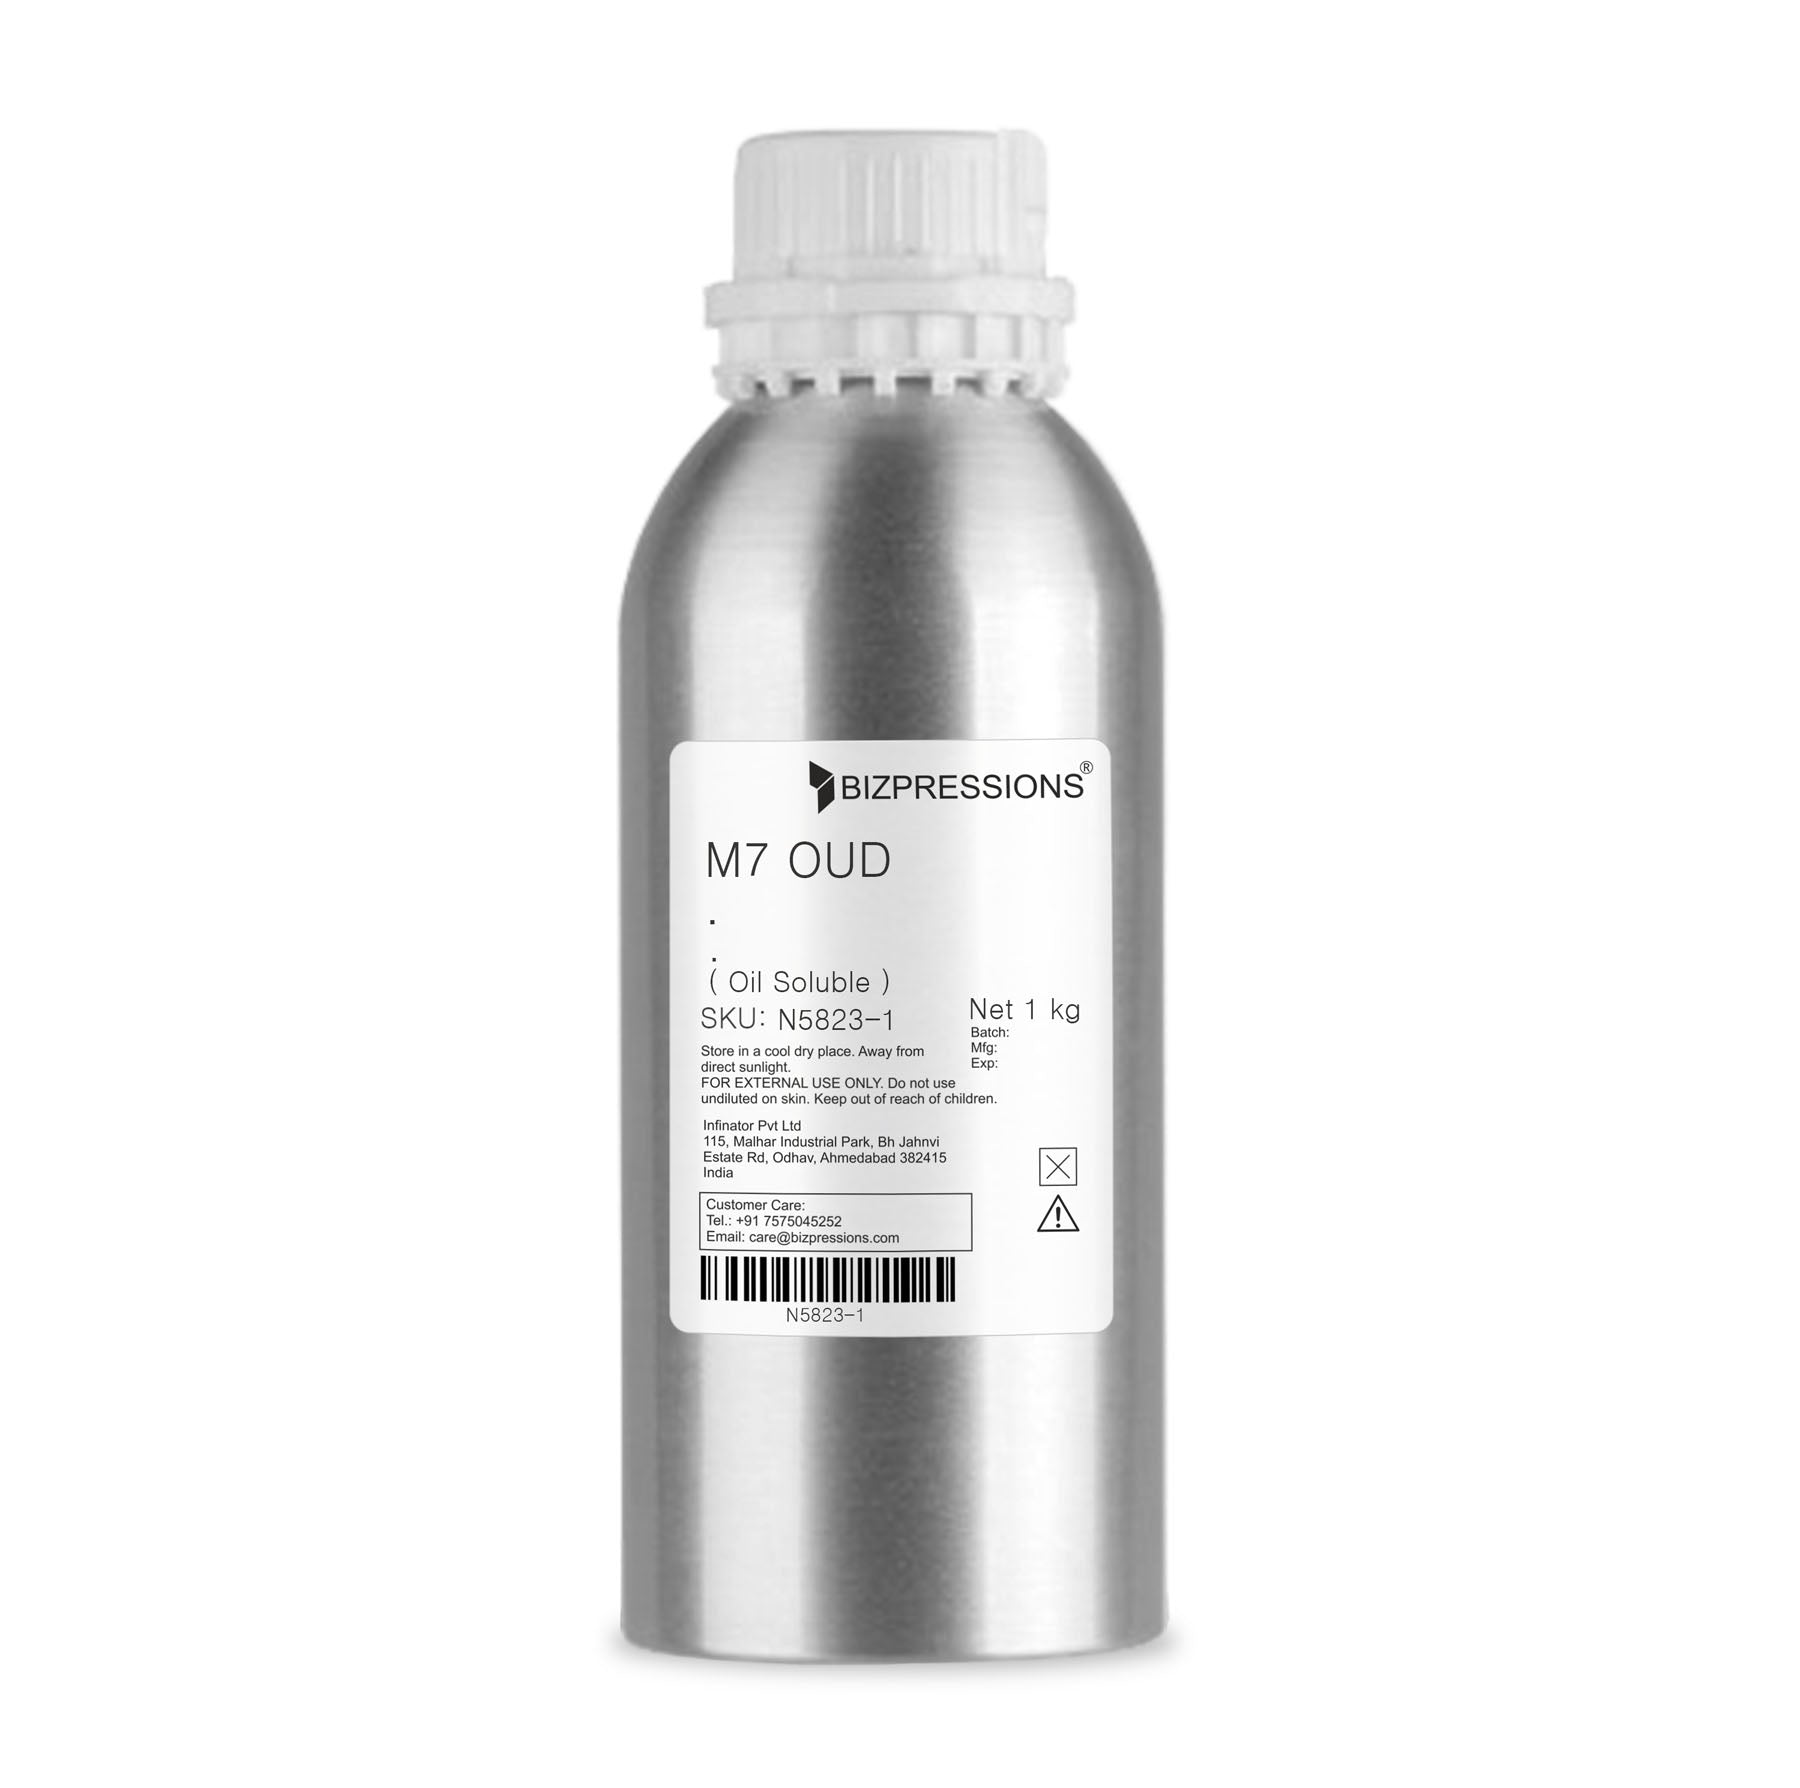 M7 OUD - Fragrance ( Oil Soluble ) - 1 kg